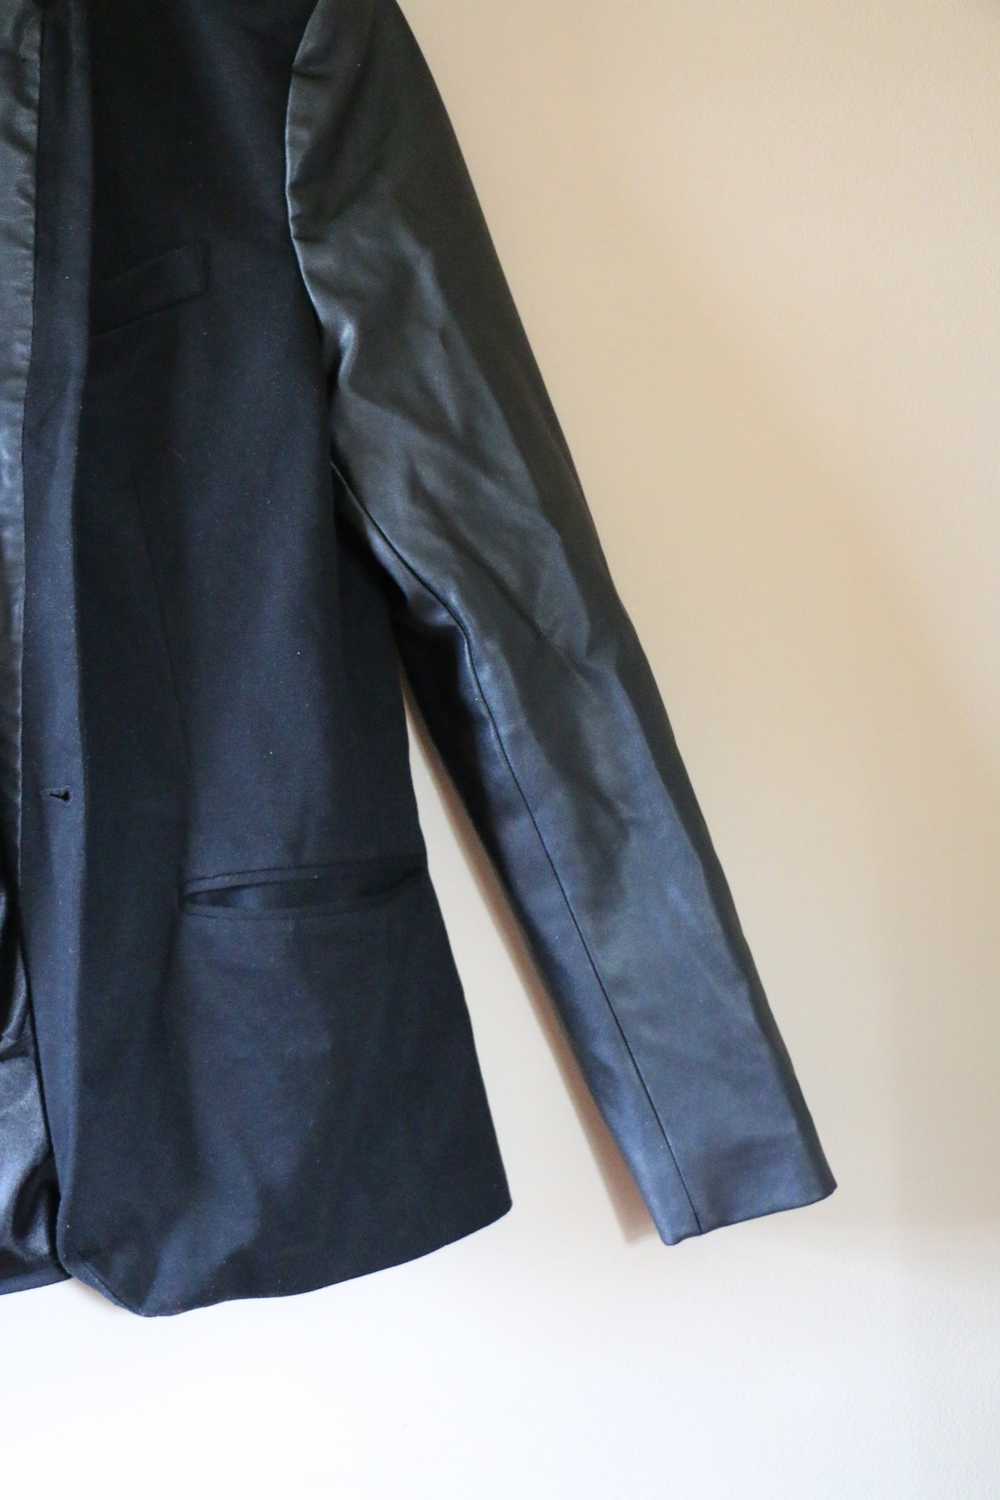 Zara Mens black blazer with leather sleeves - image 4